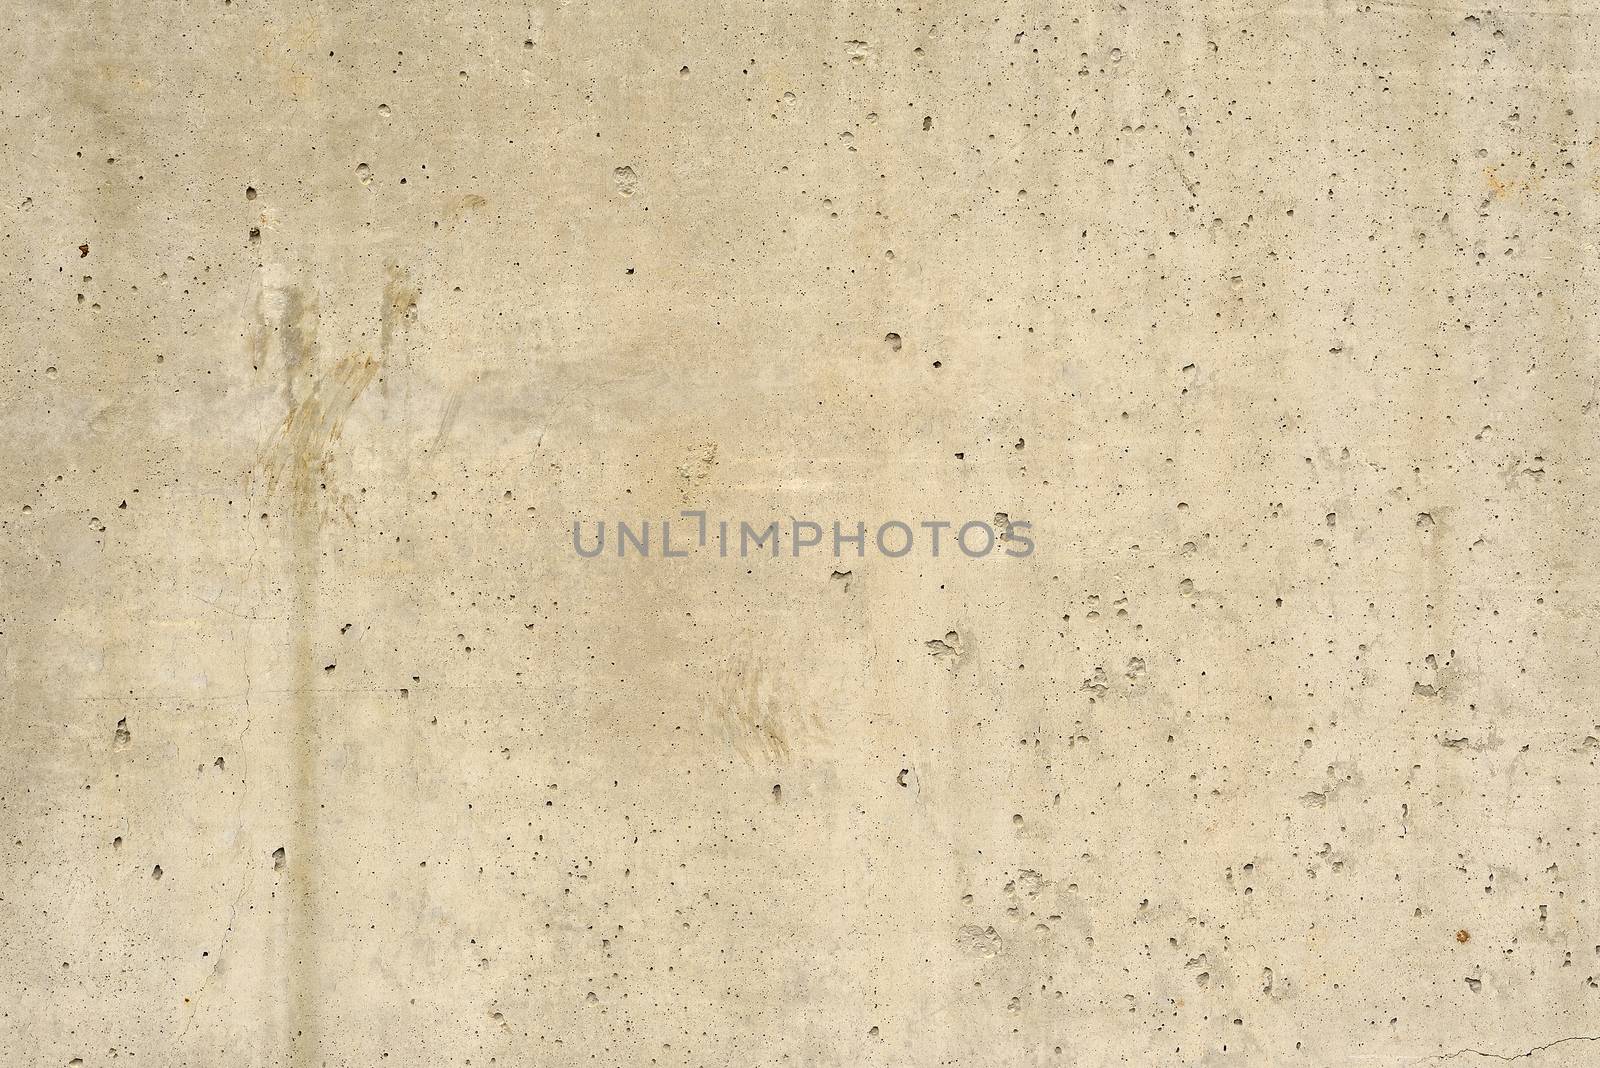 Gray concrete floor texture. The construction background